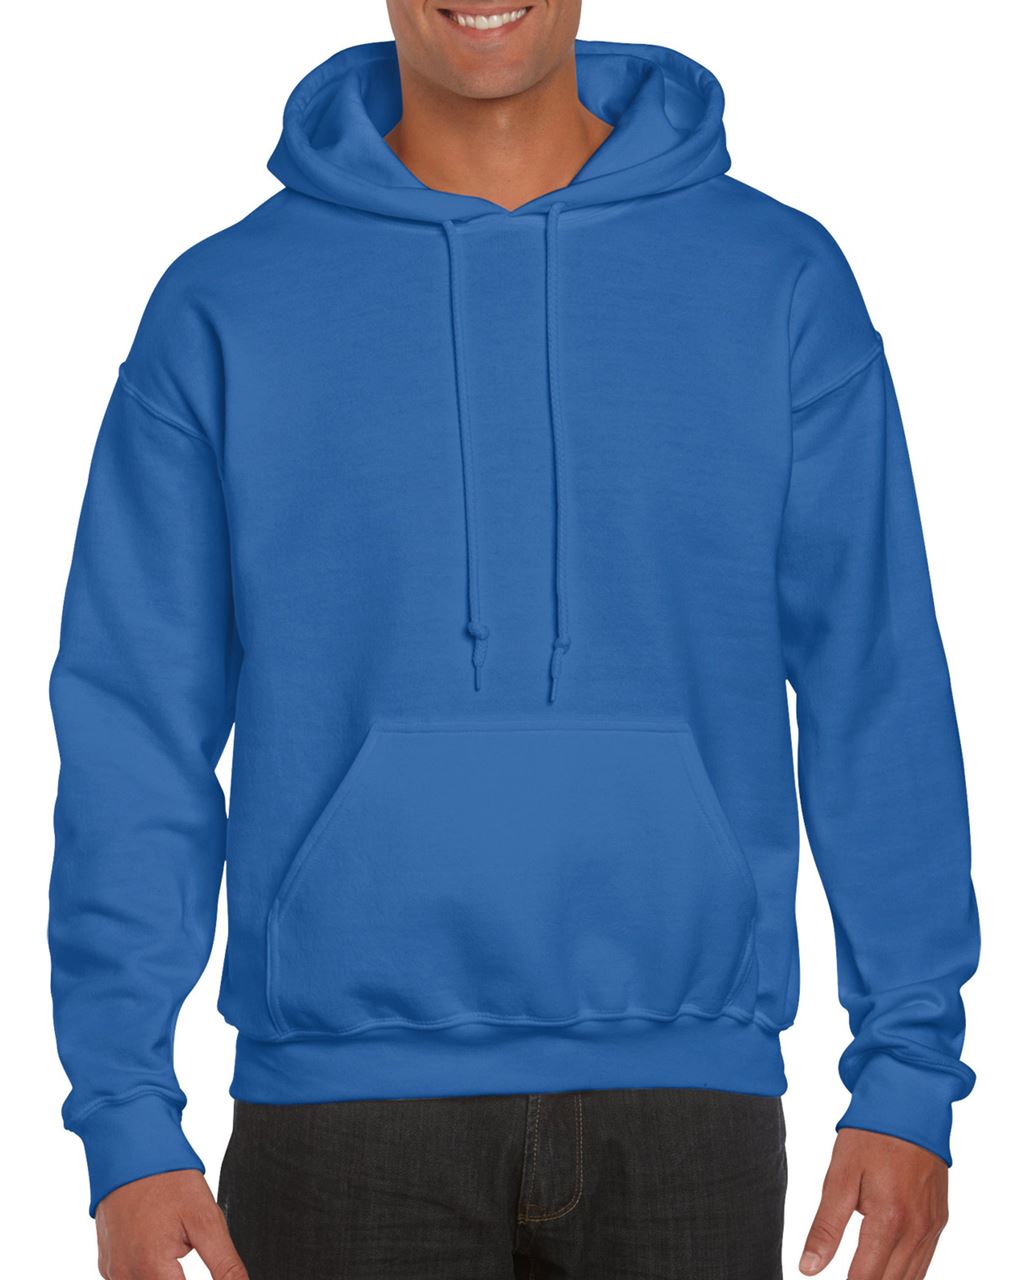 Gildan Dryblend® Adult Hooded Sweatshirt - Gildan Dryblend® Adult Hooded Sweatshirt - Royal